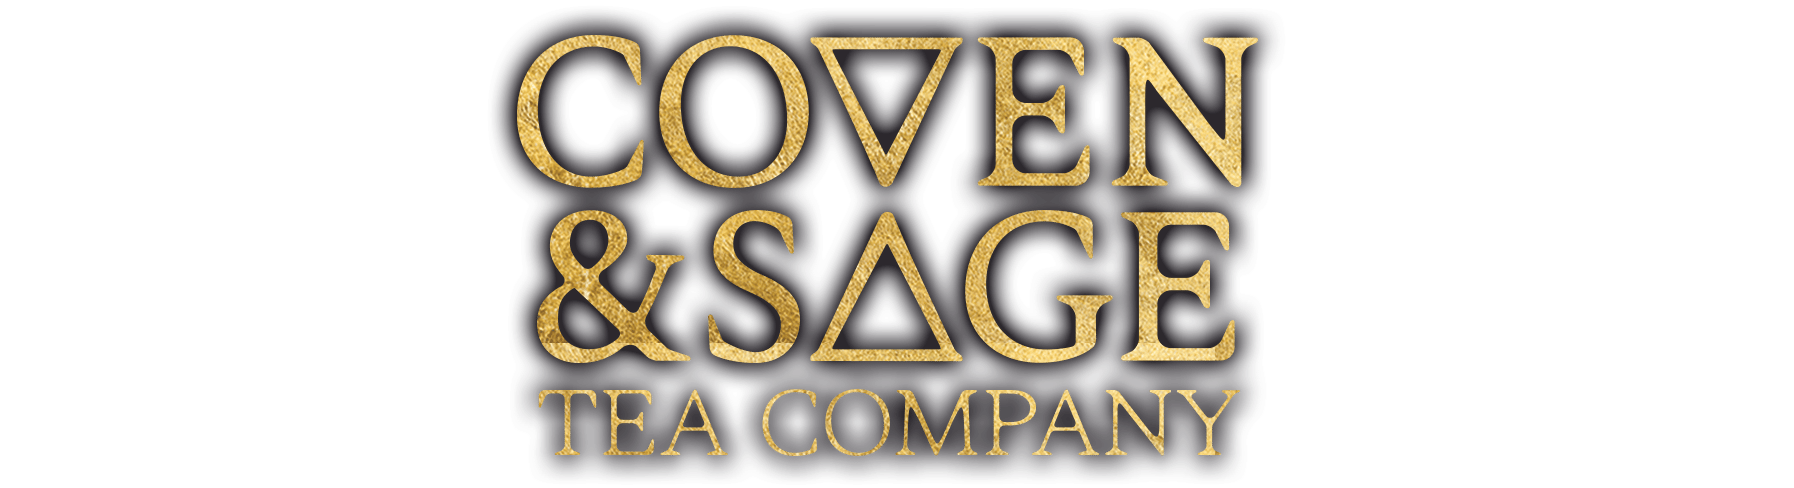 Coven & Sage Tea Company